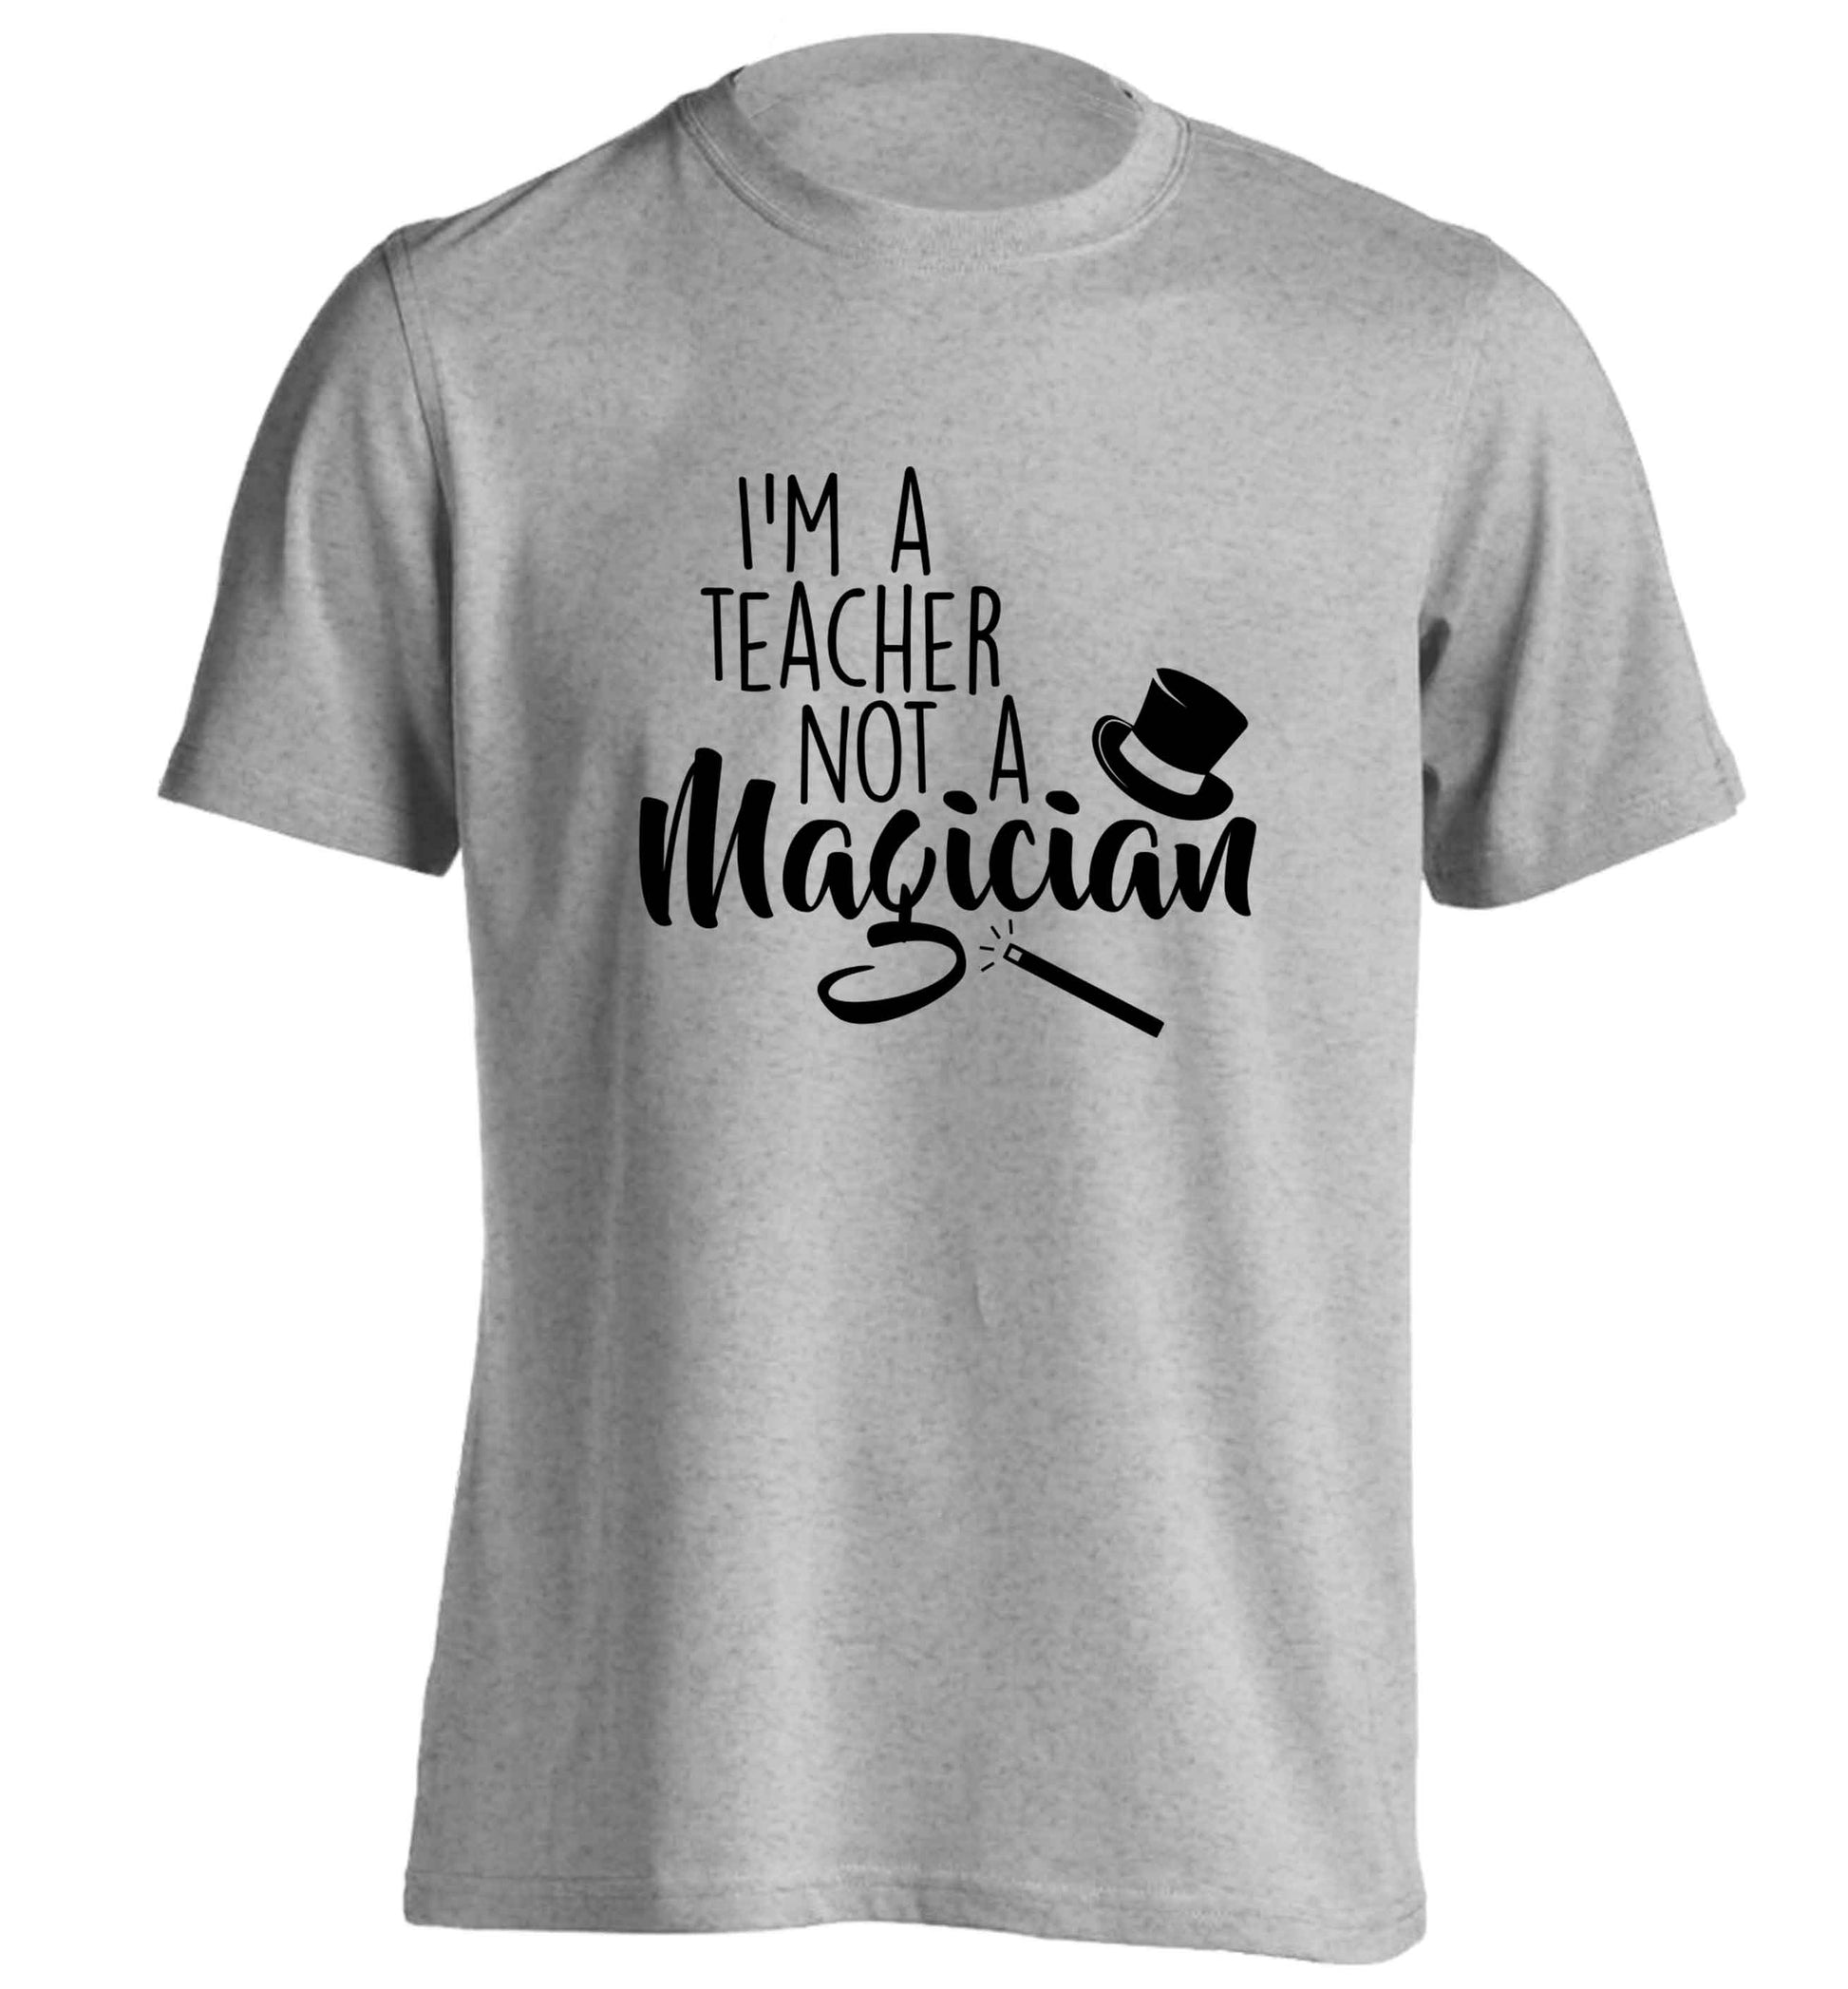 I'm a teacher not a magician adults unisex grey Tshirt 2XL